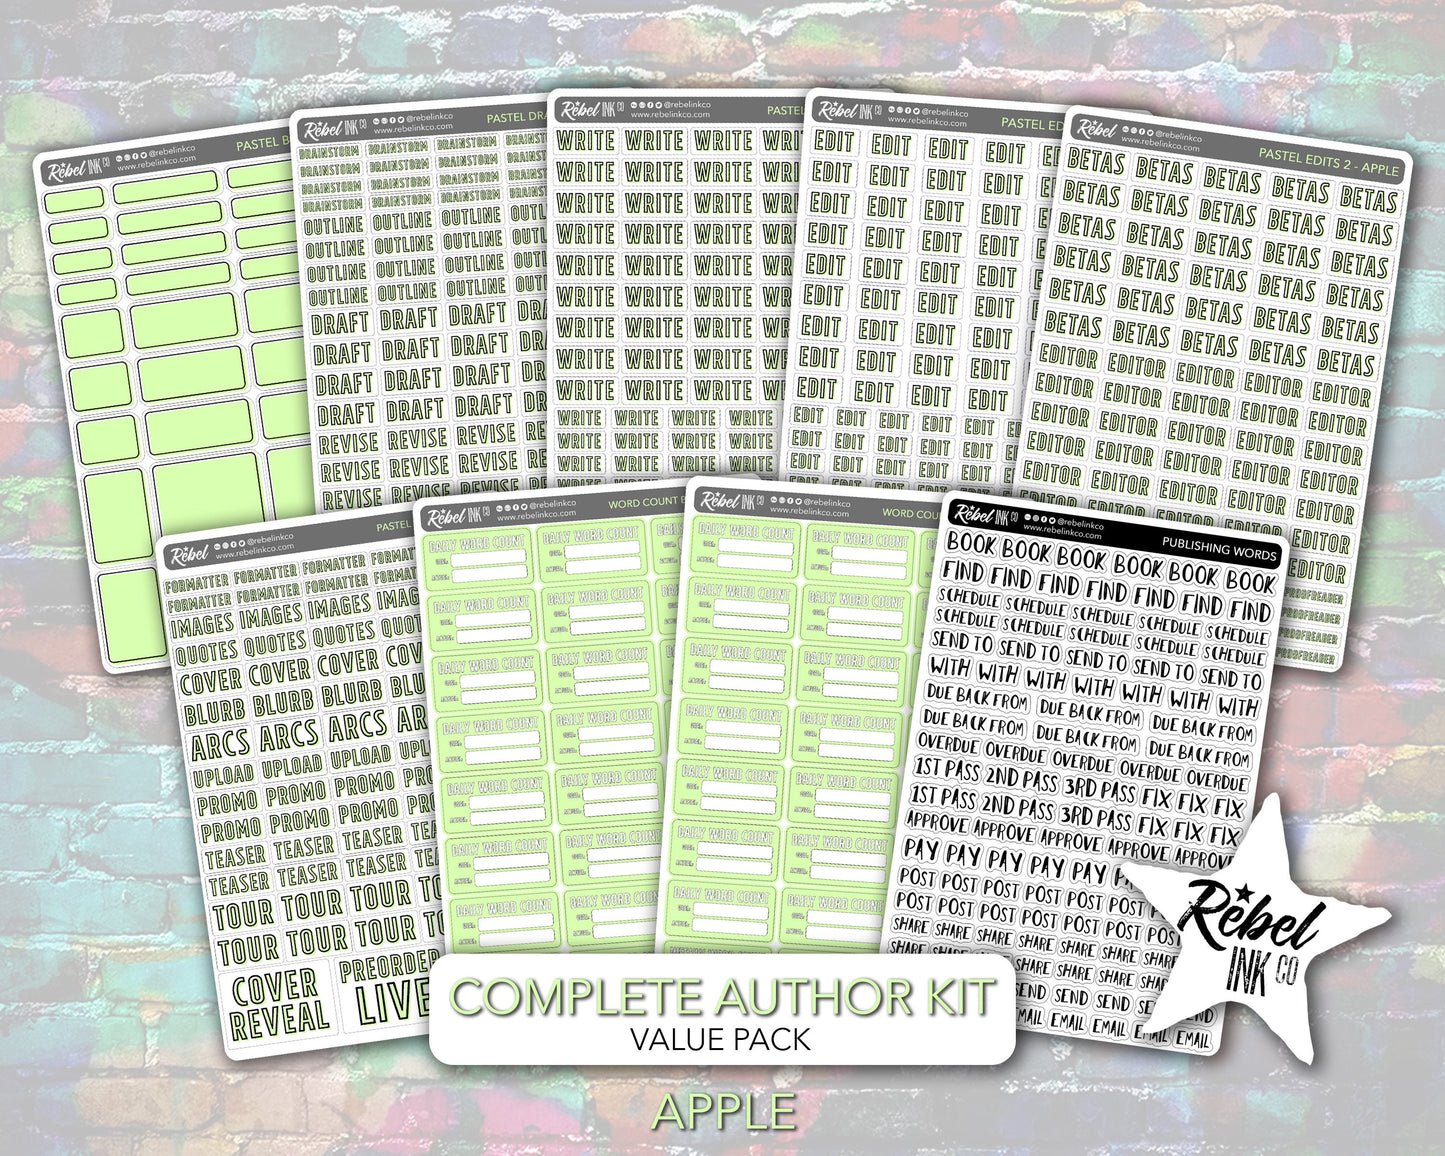 Complete Author Sticker Kit - Pastel Options